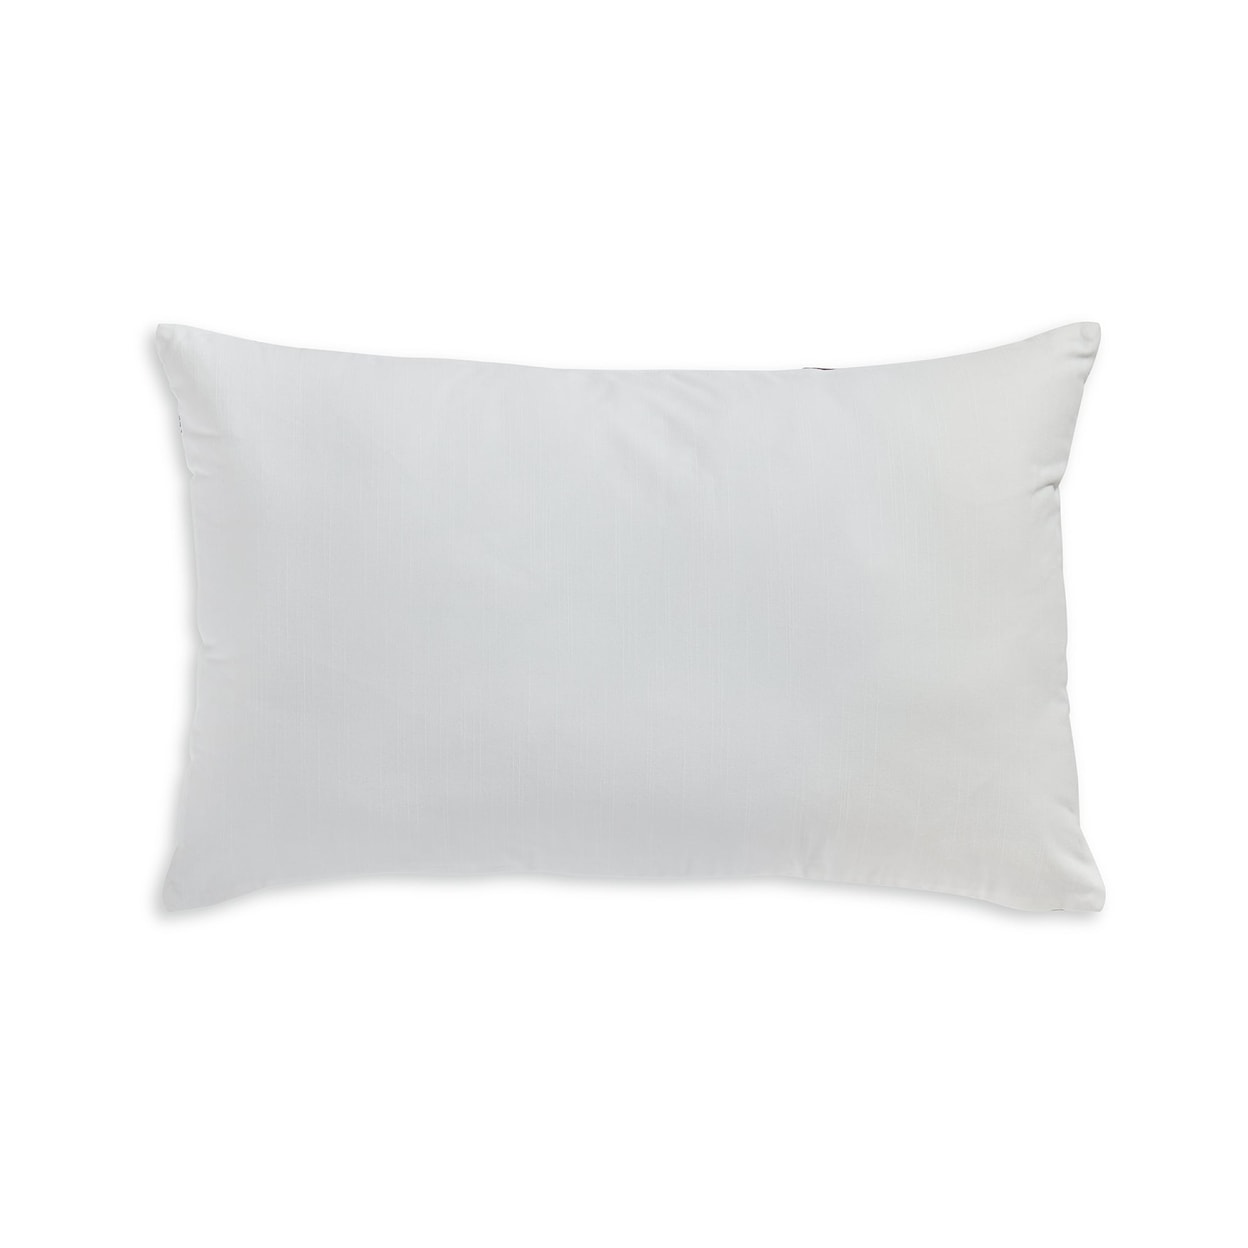 Ashley Furniture Signature Design Lanston Accent Pillow (Set of 4)